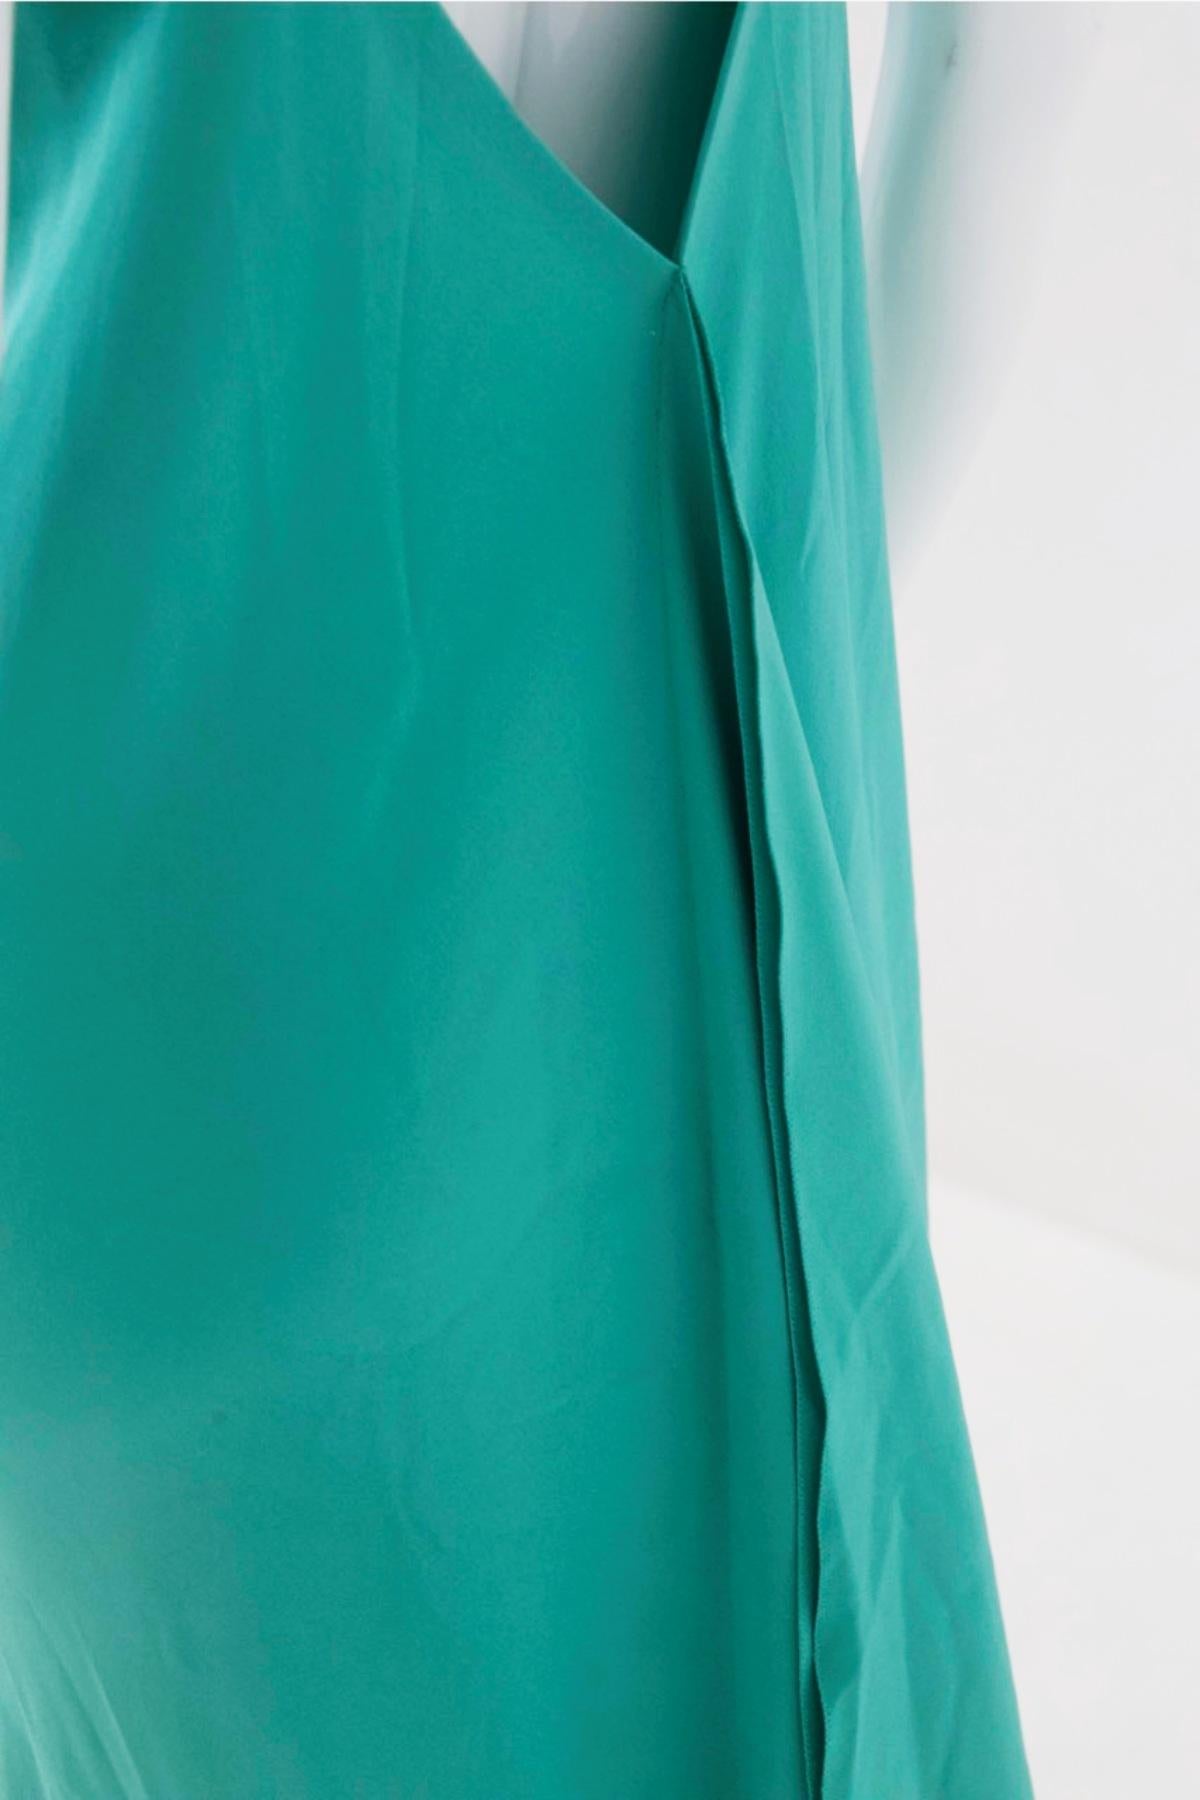 Pierre Cardin Vintage Teal Long Dress For Sale 2